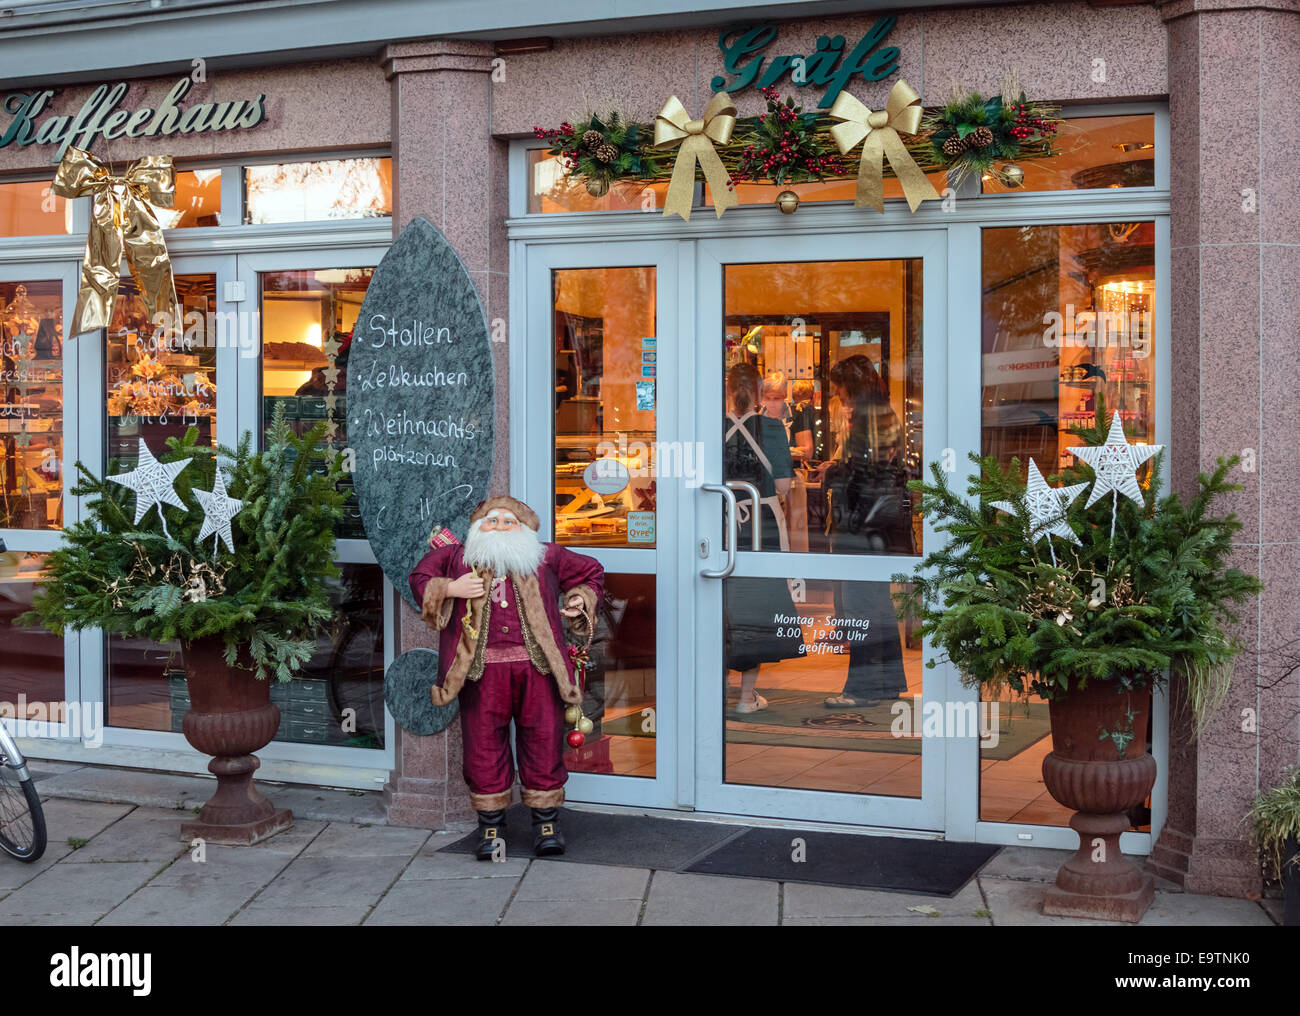 Coffee shop entrance, festive Christmas decorations, Germany Stock ...